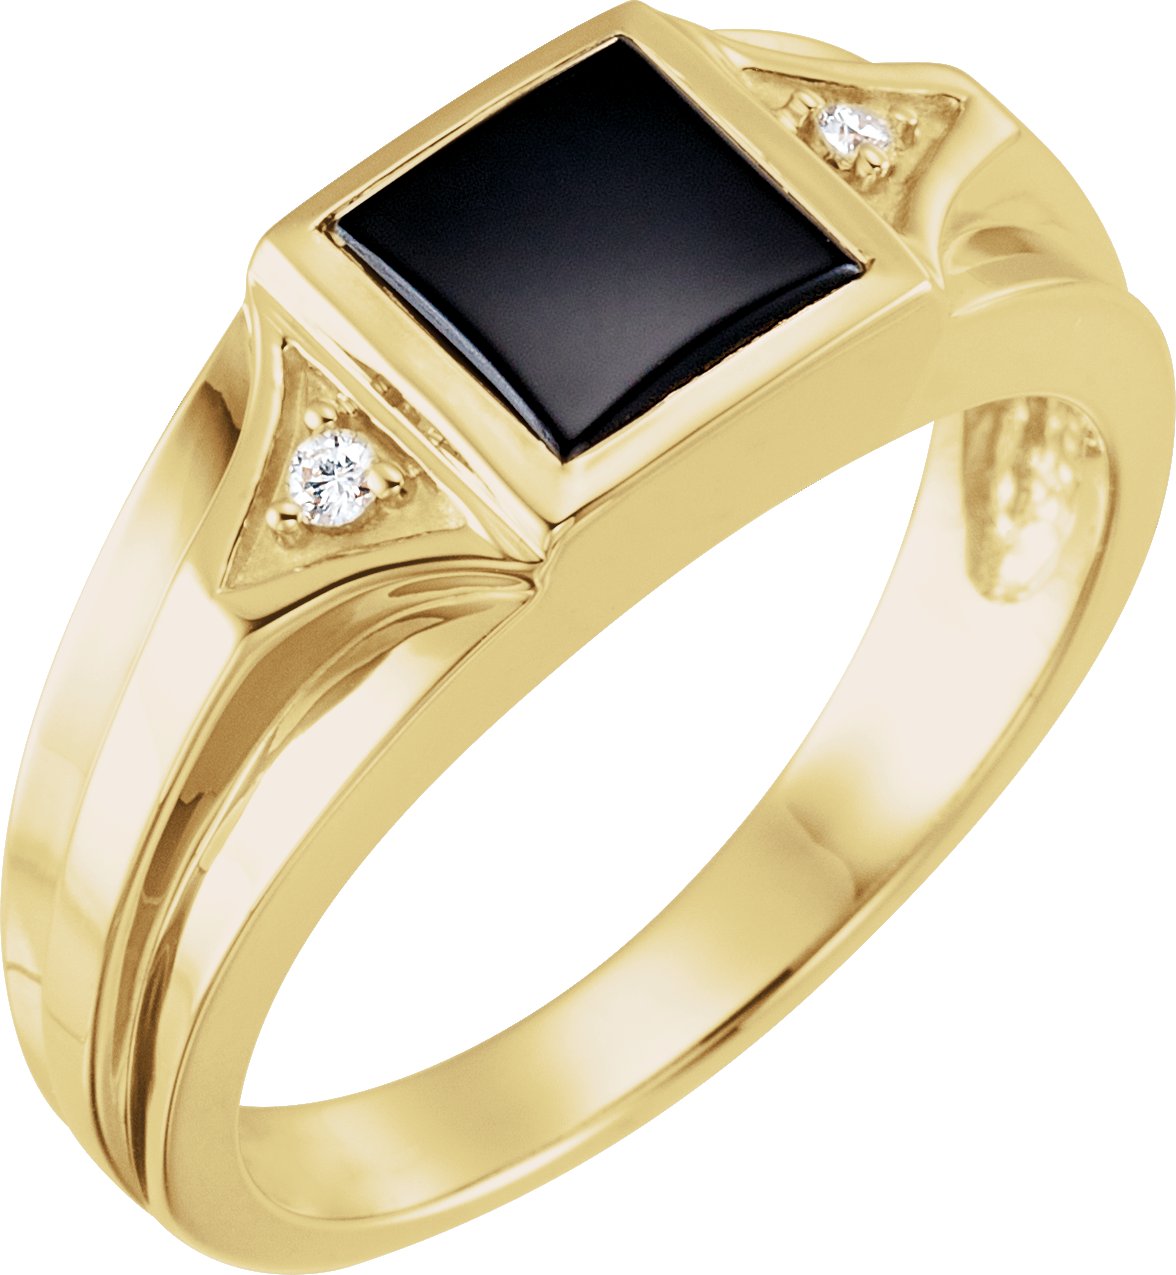 14K Yellow Onyx and .04 CTW Diamond Bezel Set Ring Ref 258724